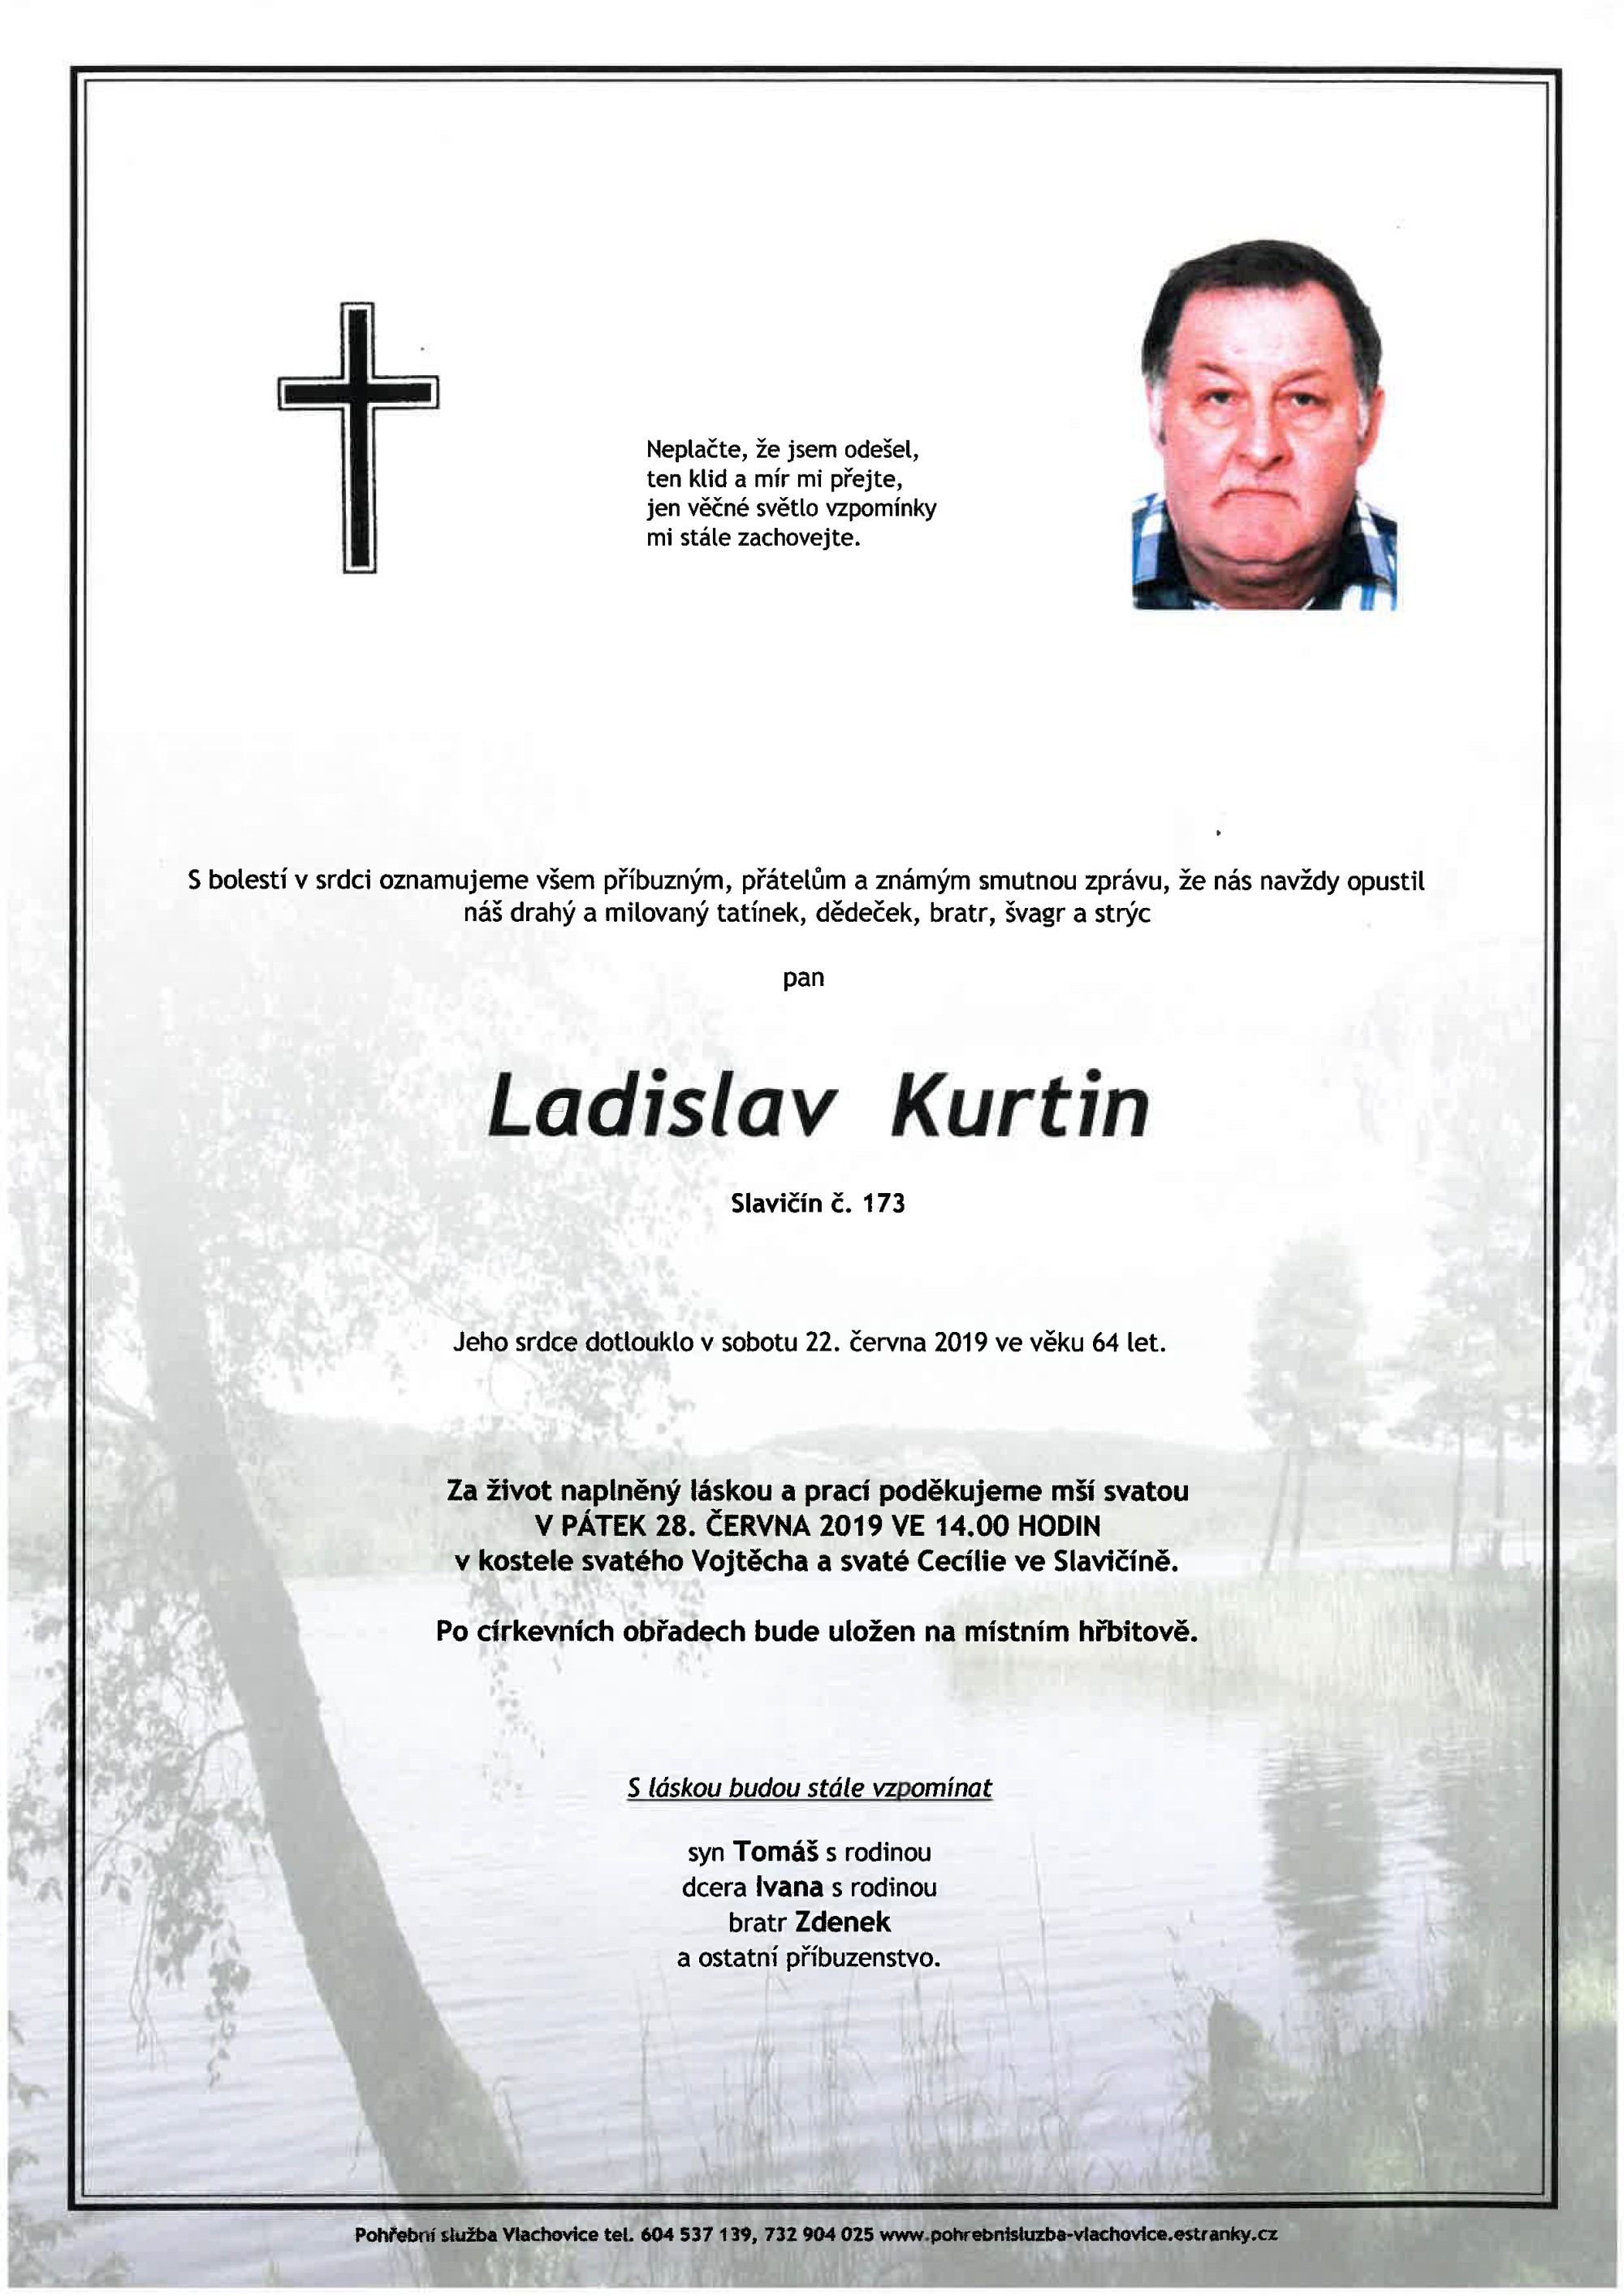 Ladislav Kurtin